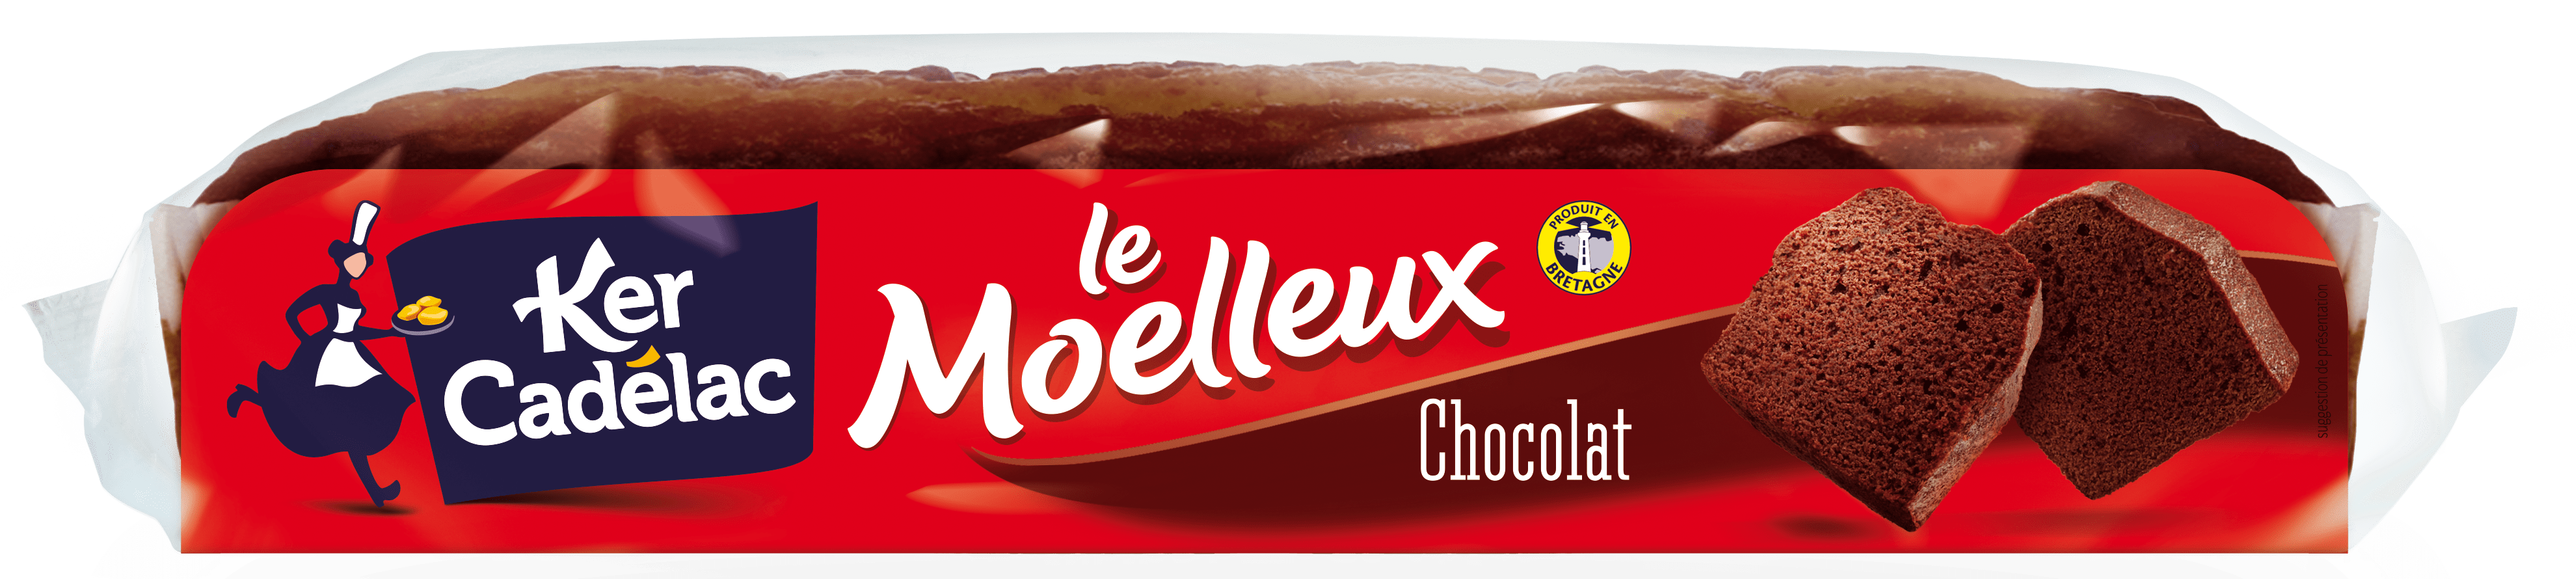 Moelleux chocolat | Ker Cadélac